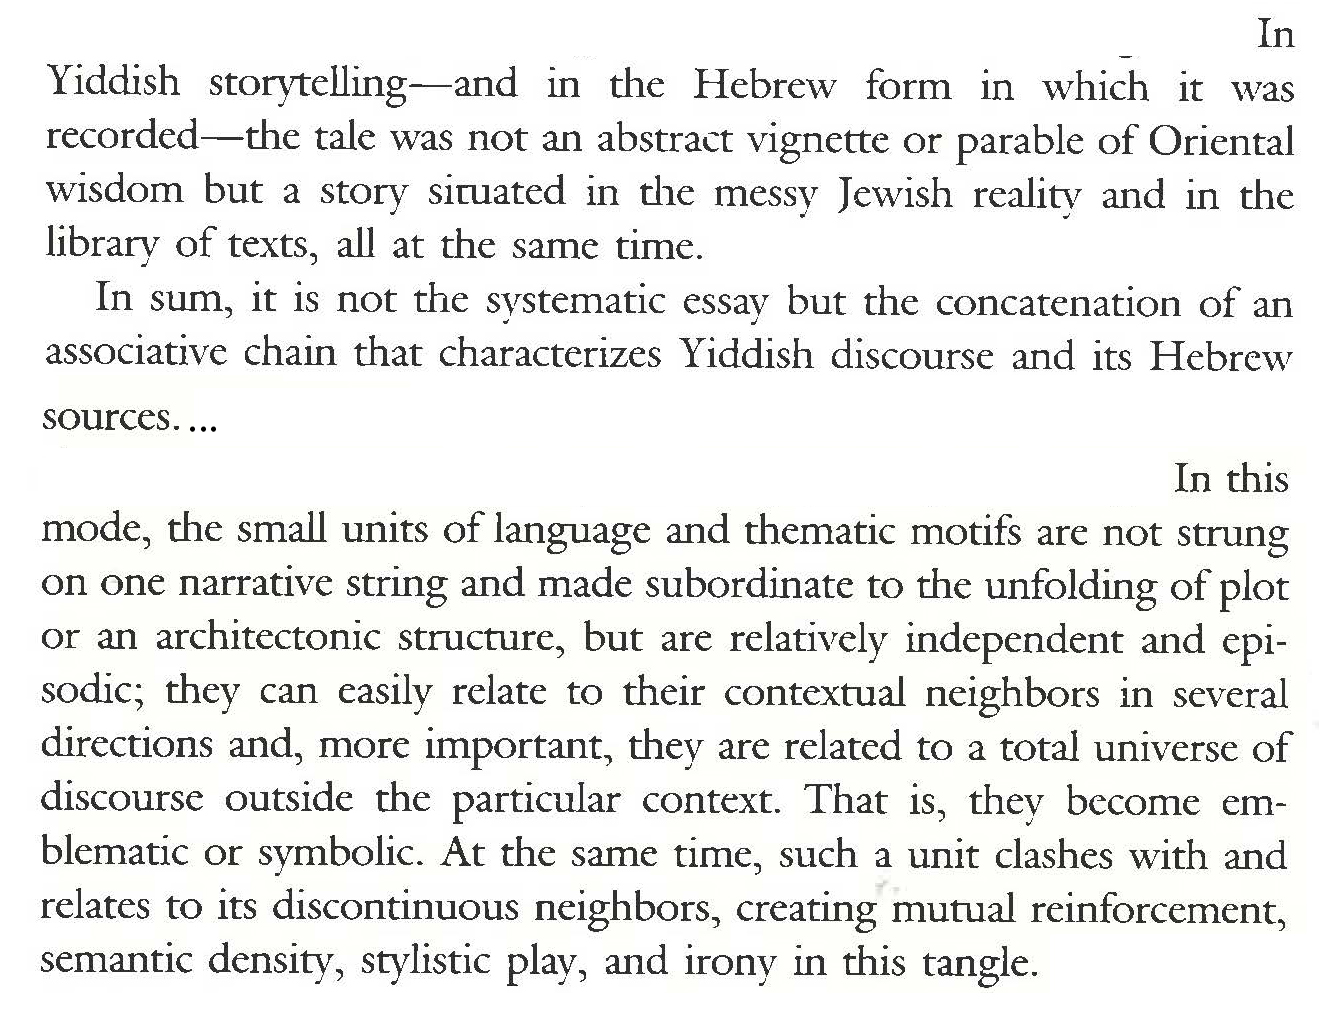 Benjamin Harshav, The Meaning of Yiddish excerpt